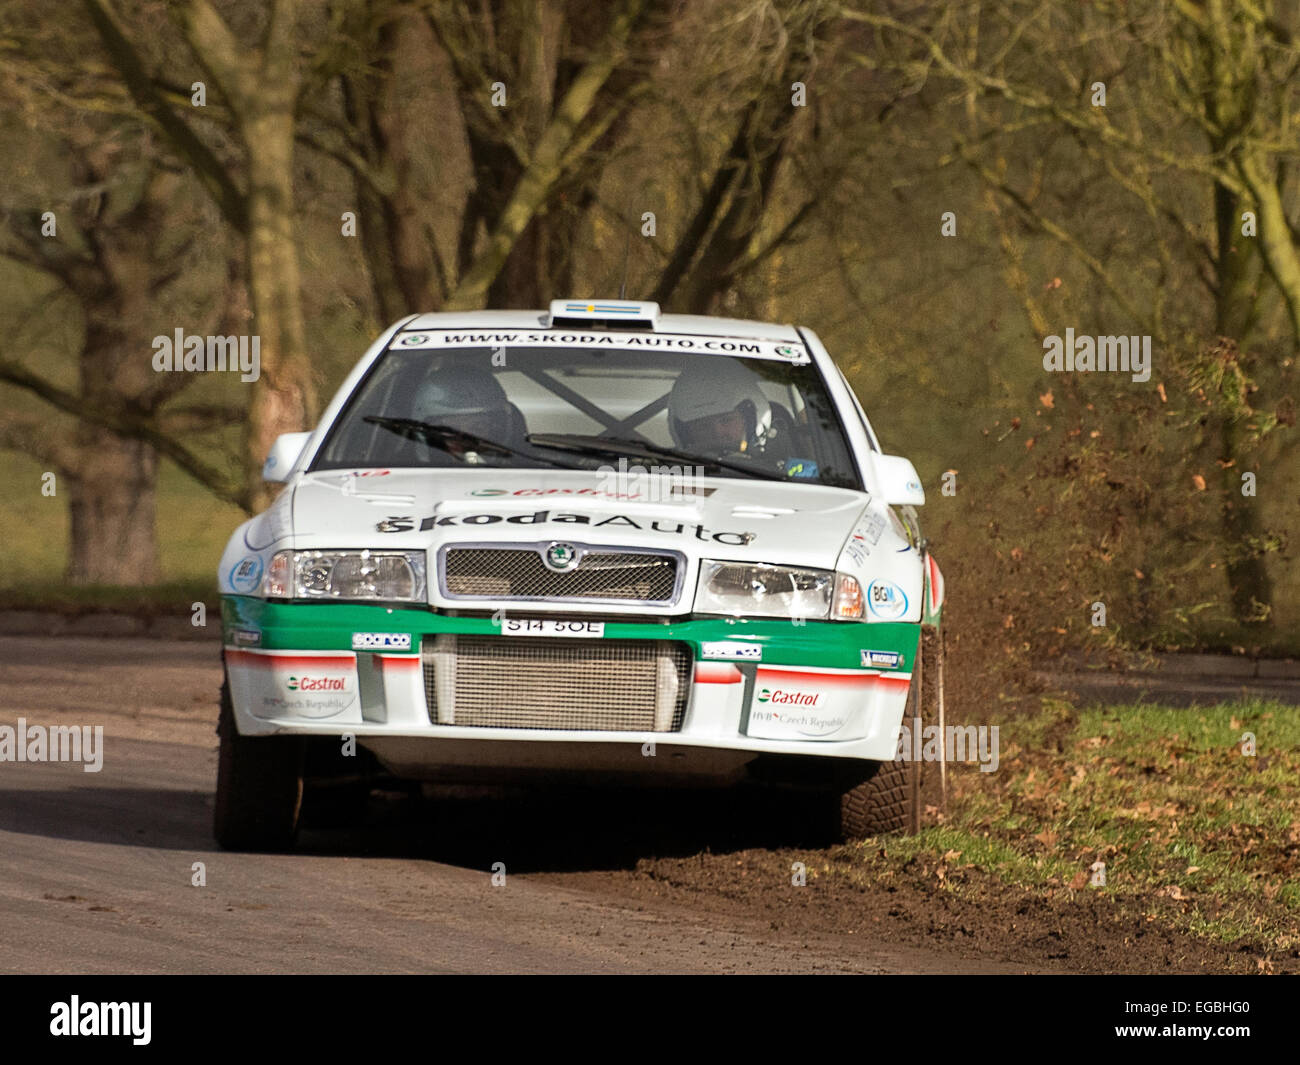 Warwickshire, UK. 21. Februar 2015. Skoda Octavia Rallye Auto auf Rennen Retro special stage 21.02.2015 Credit: Martyn Goddard/Alamy Live News Stockfoto